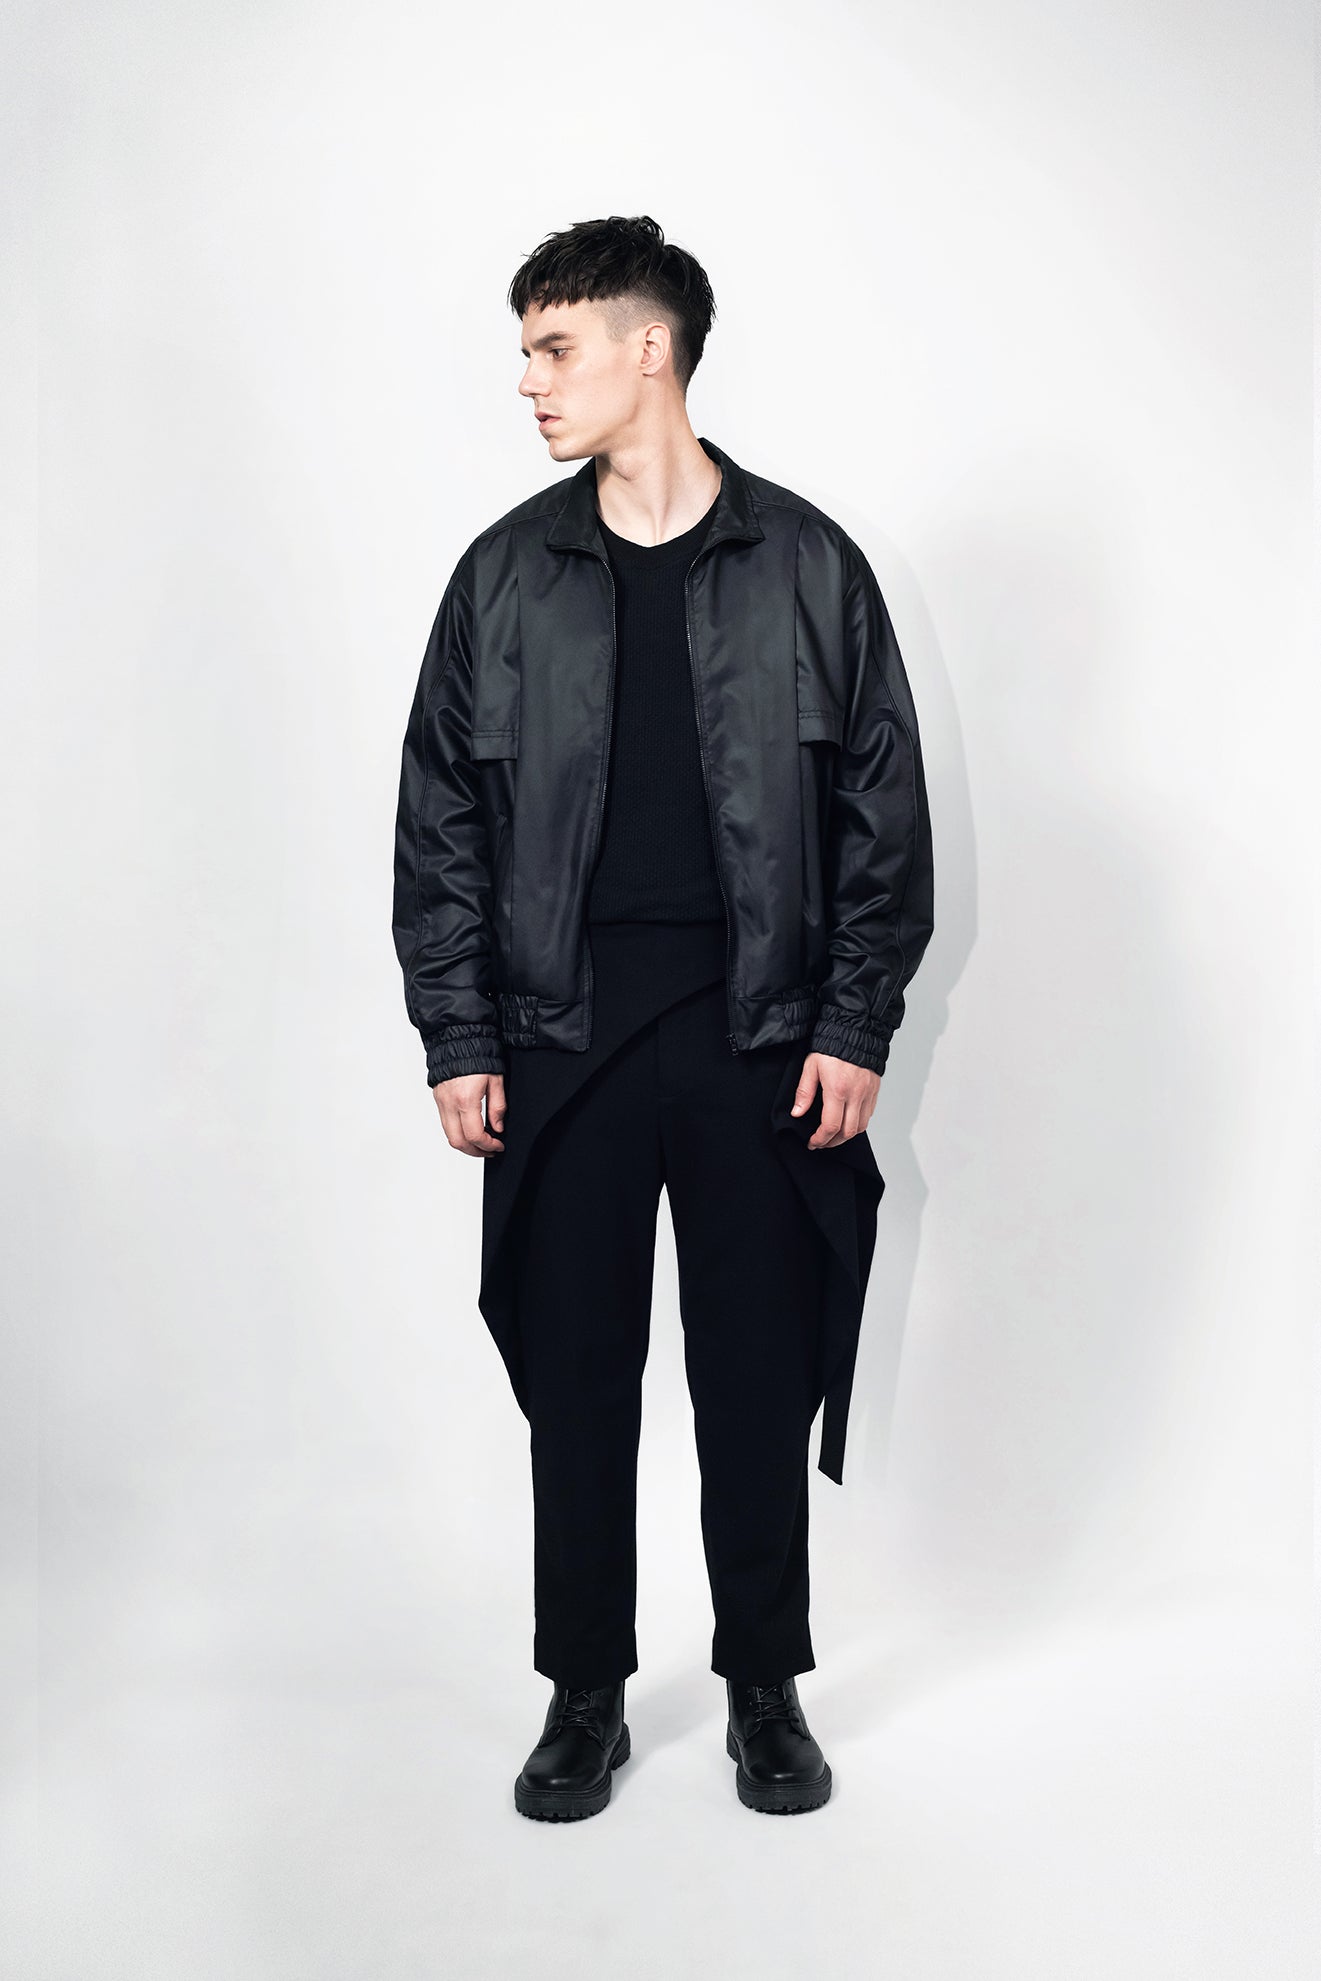 SEANNUNG - MEN - Cross windbreaker jacket 亮黑十字襠風衣夾克